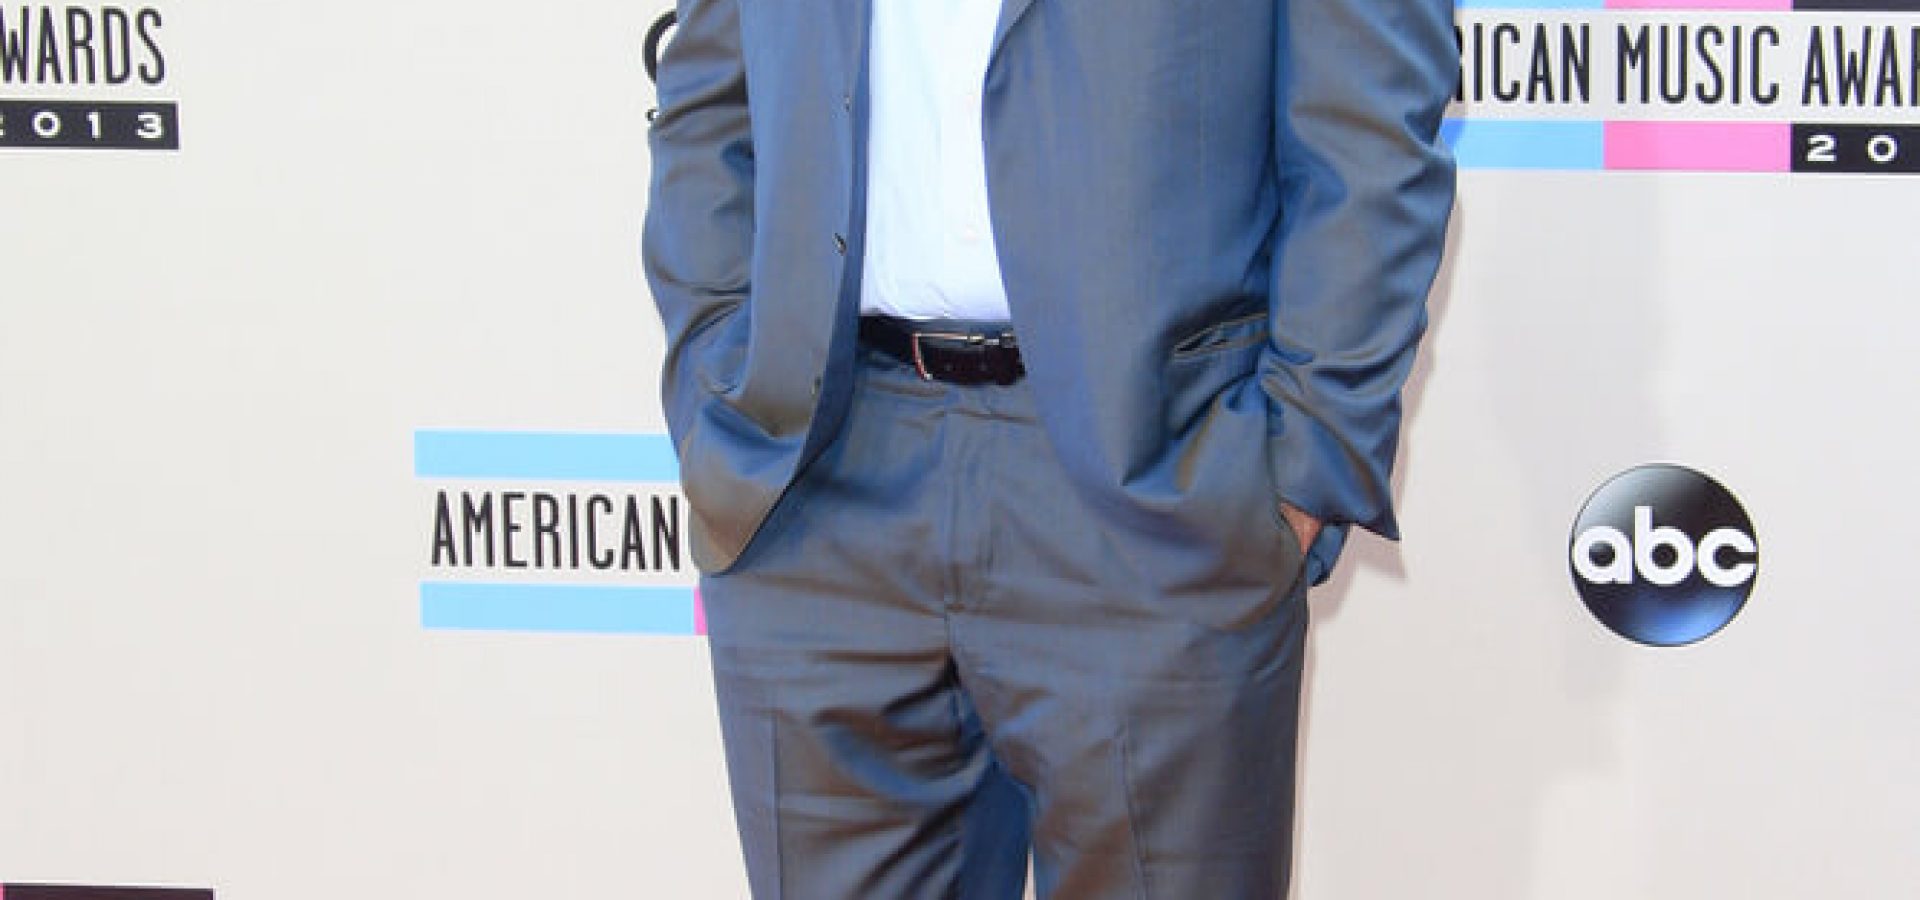 Digital Coins: Mark Cuban at the 2013 American Music Awards